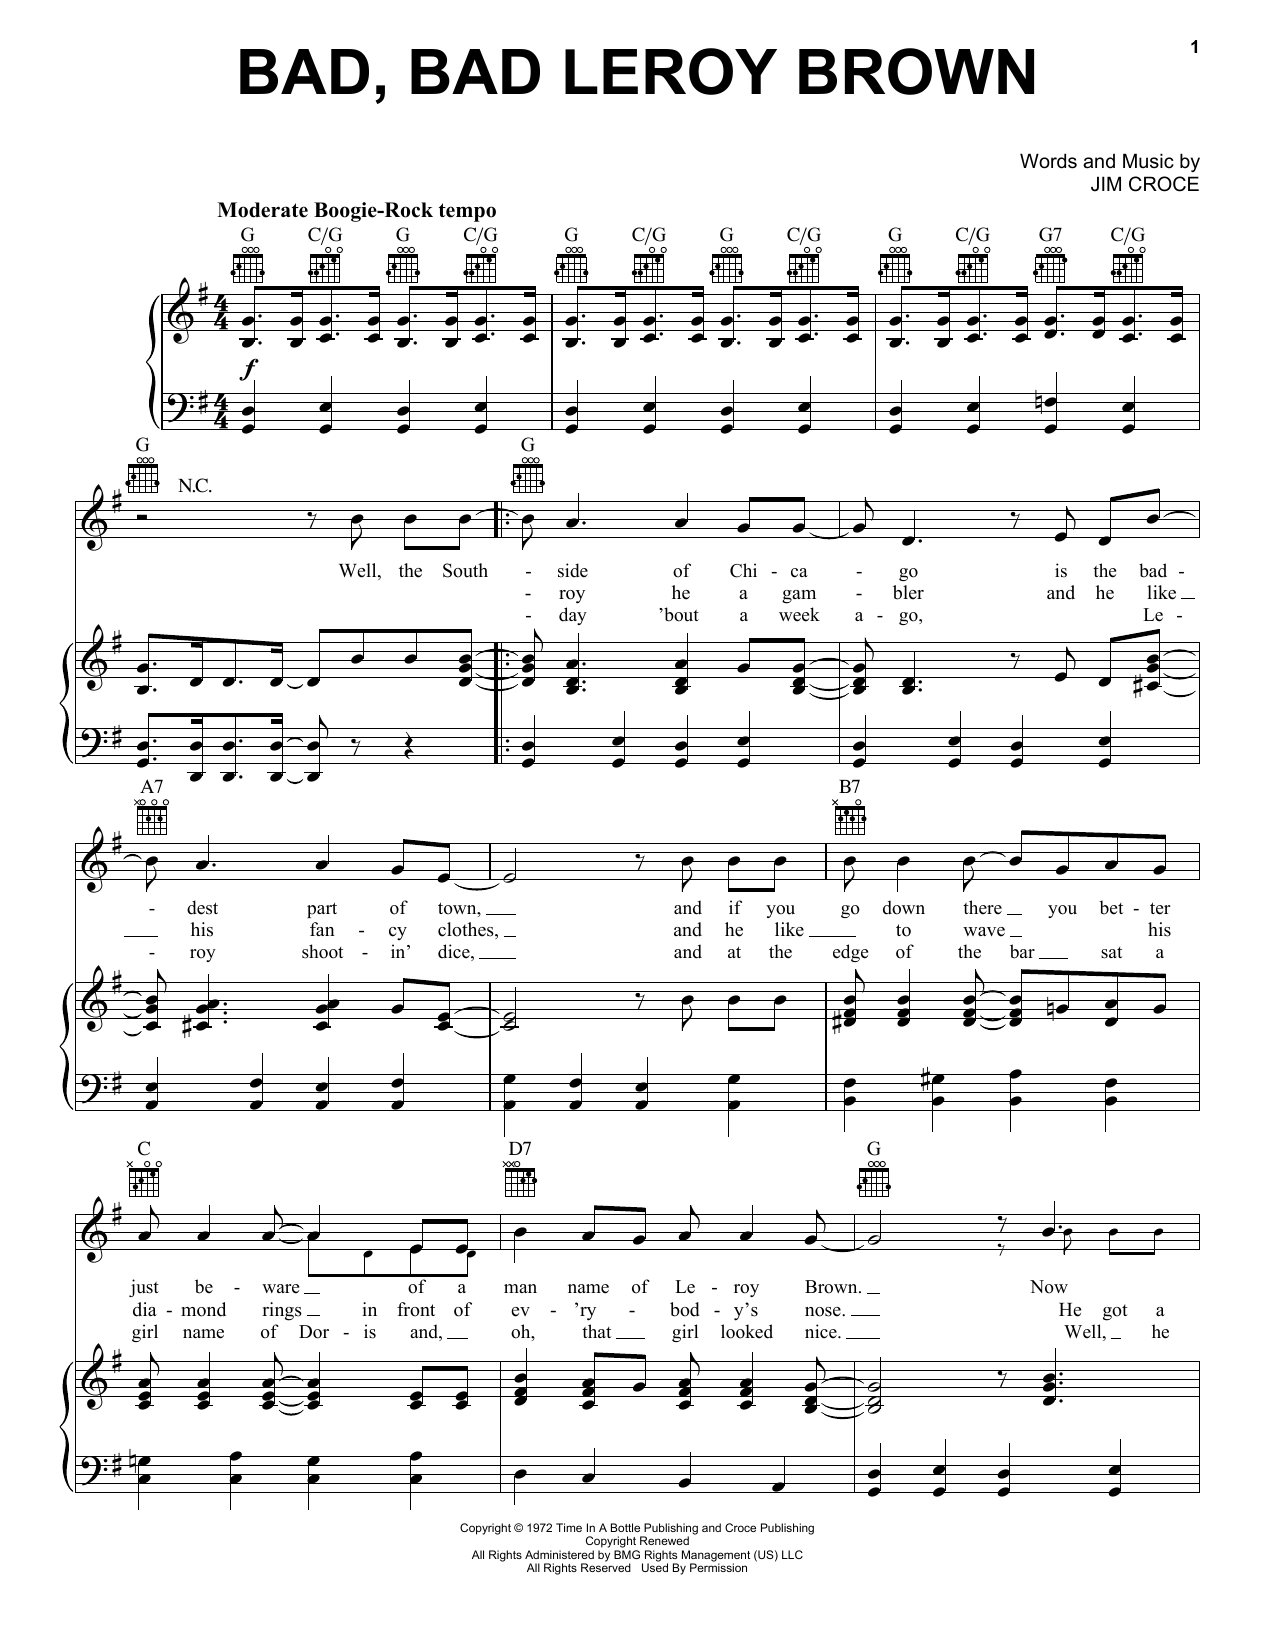 Jim Croce Bad, Bad Leroy Brown Sheet Music Notes & Chords for Trumpet - Download or Print PDF